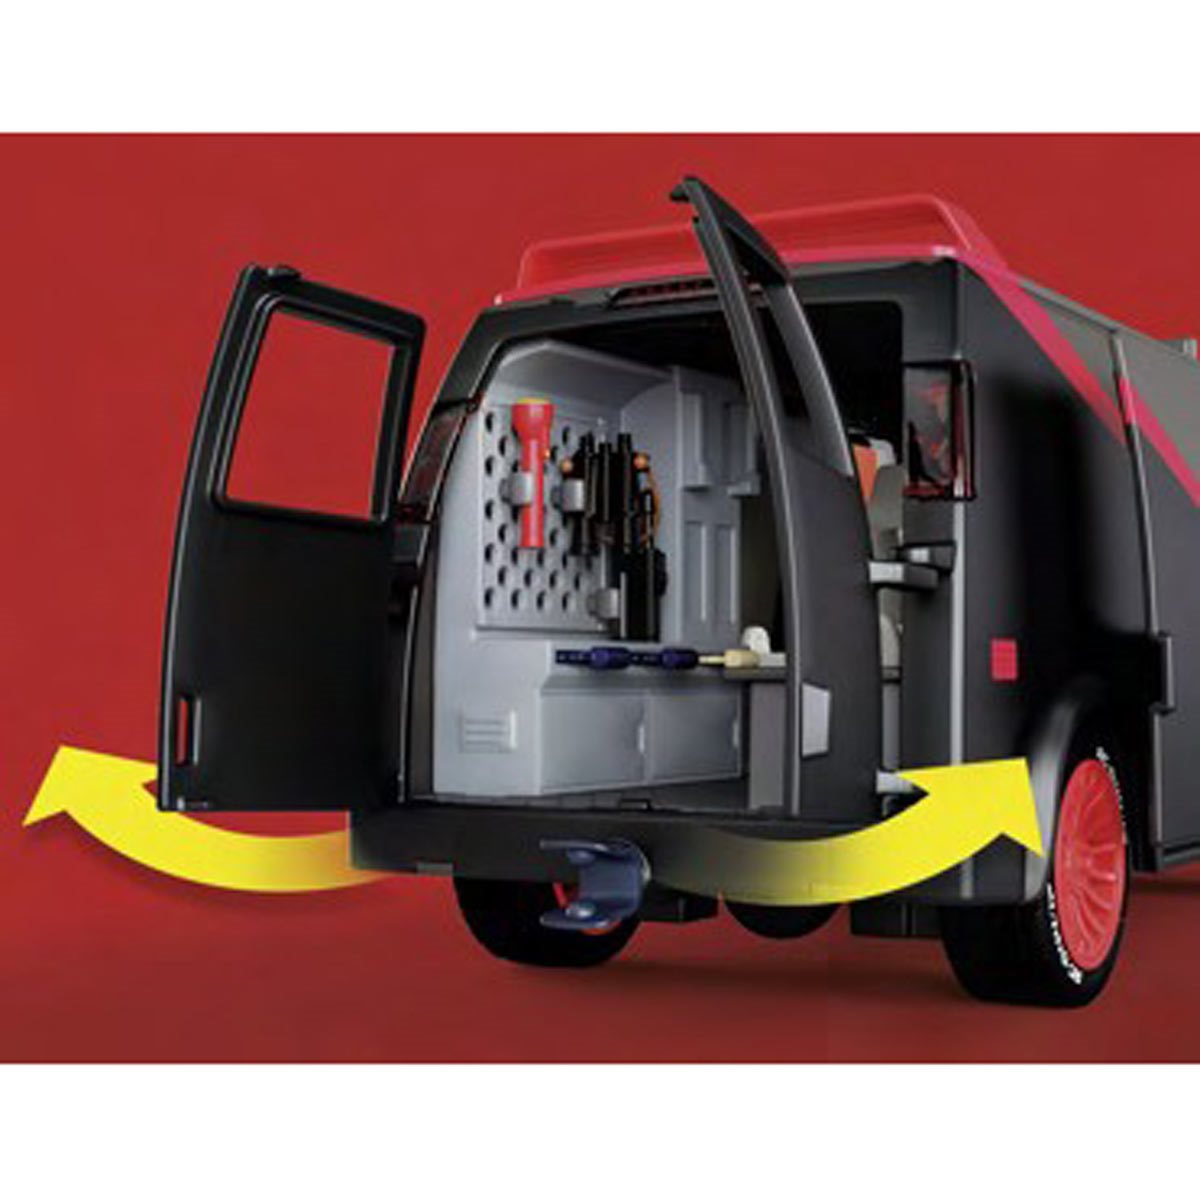 Playmobil The A-Team Van and Set